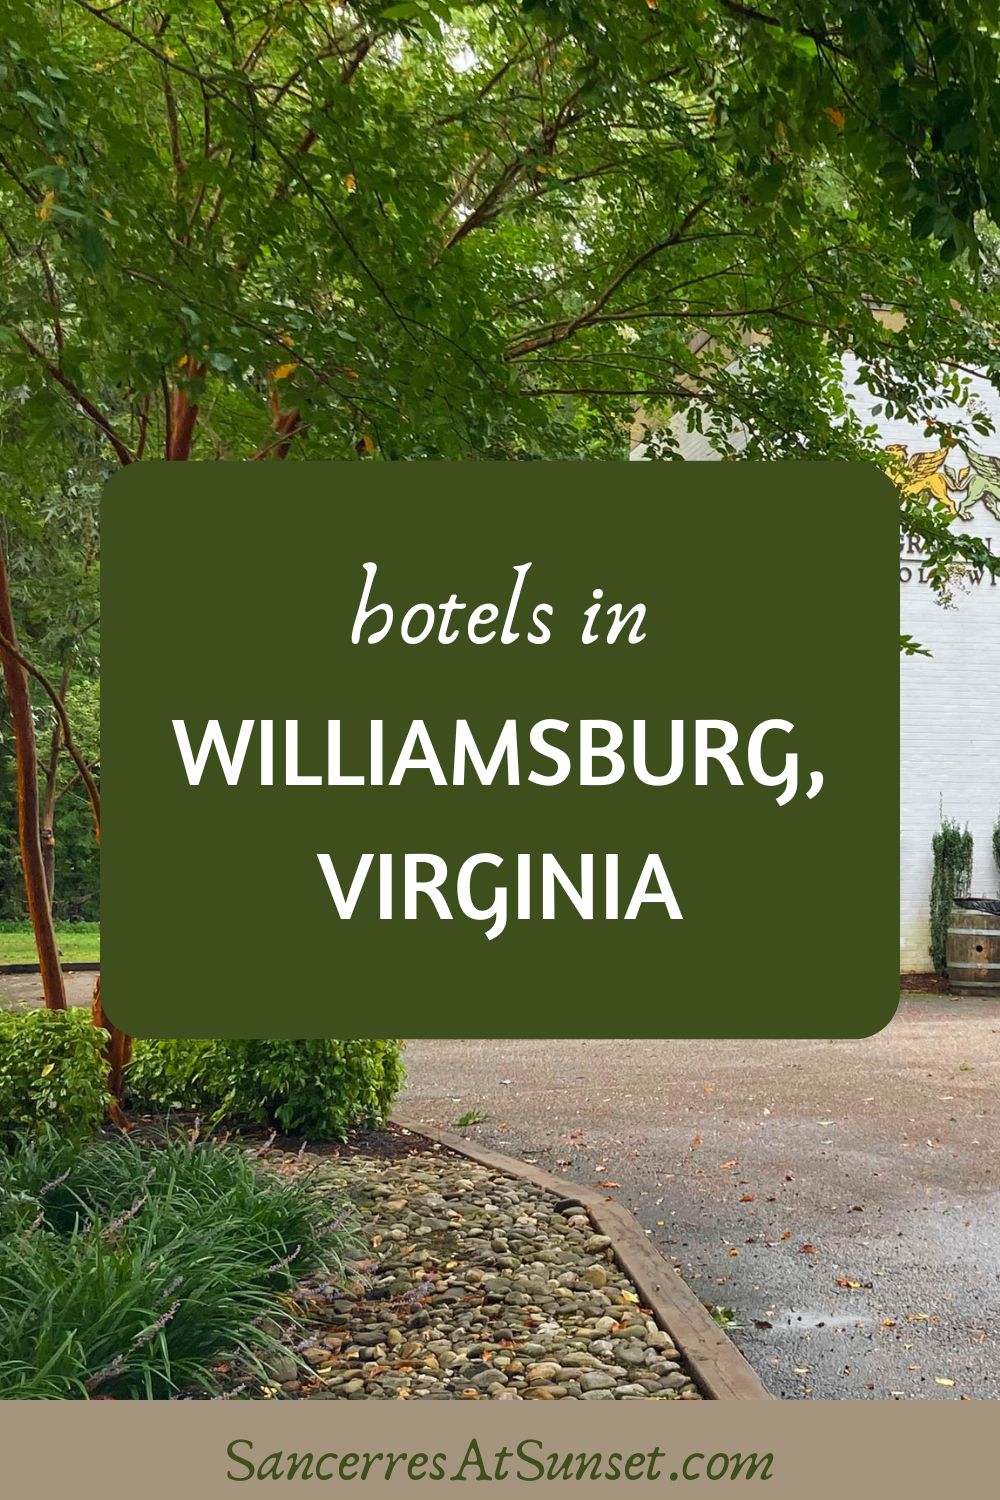 Hotels in Williamsburg, Virginia